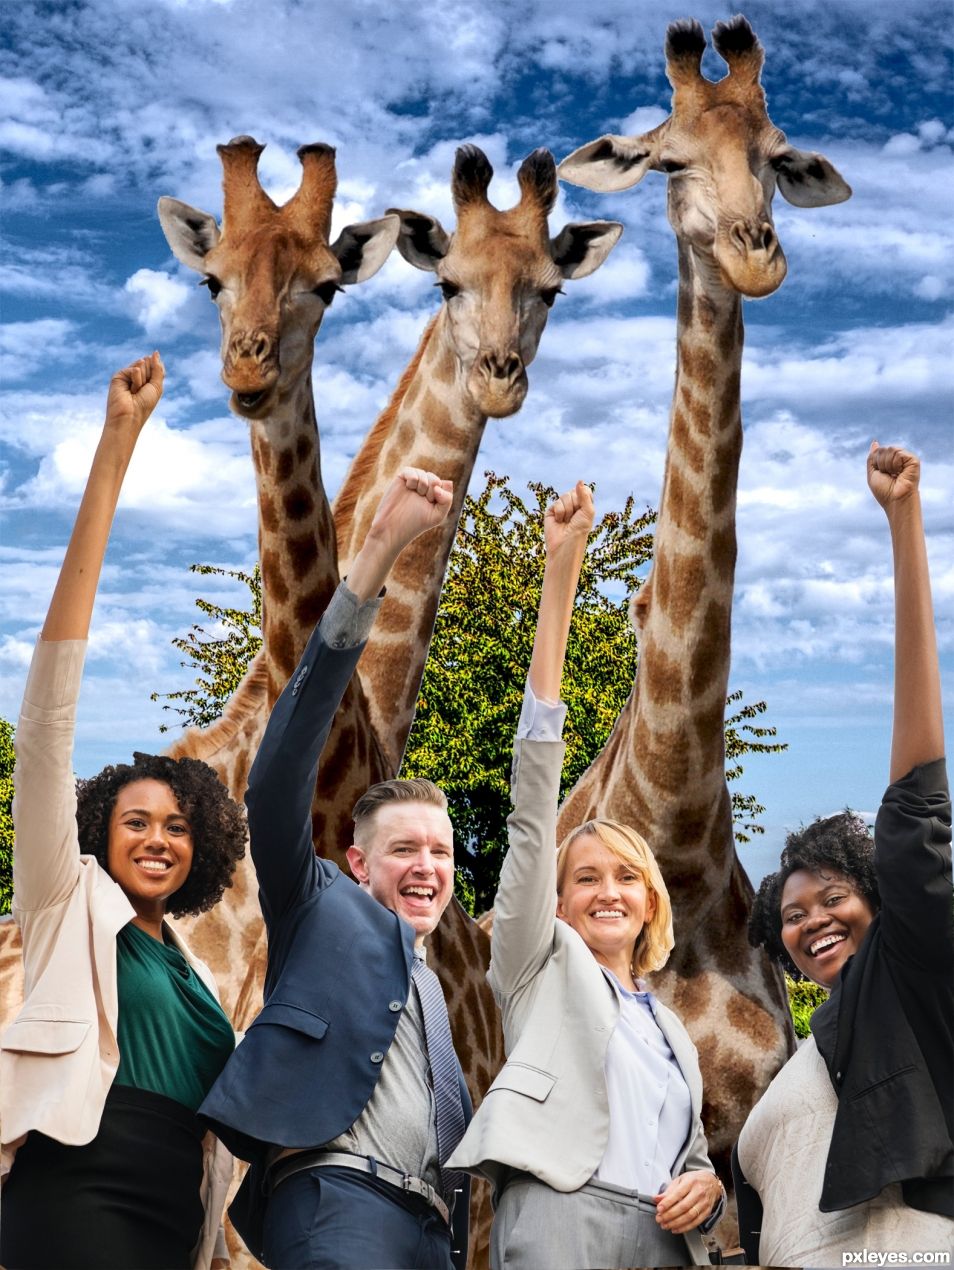 The Giraffe Group